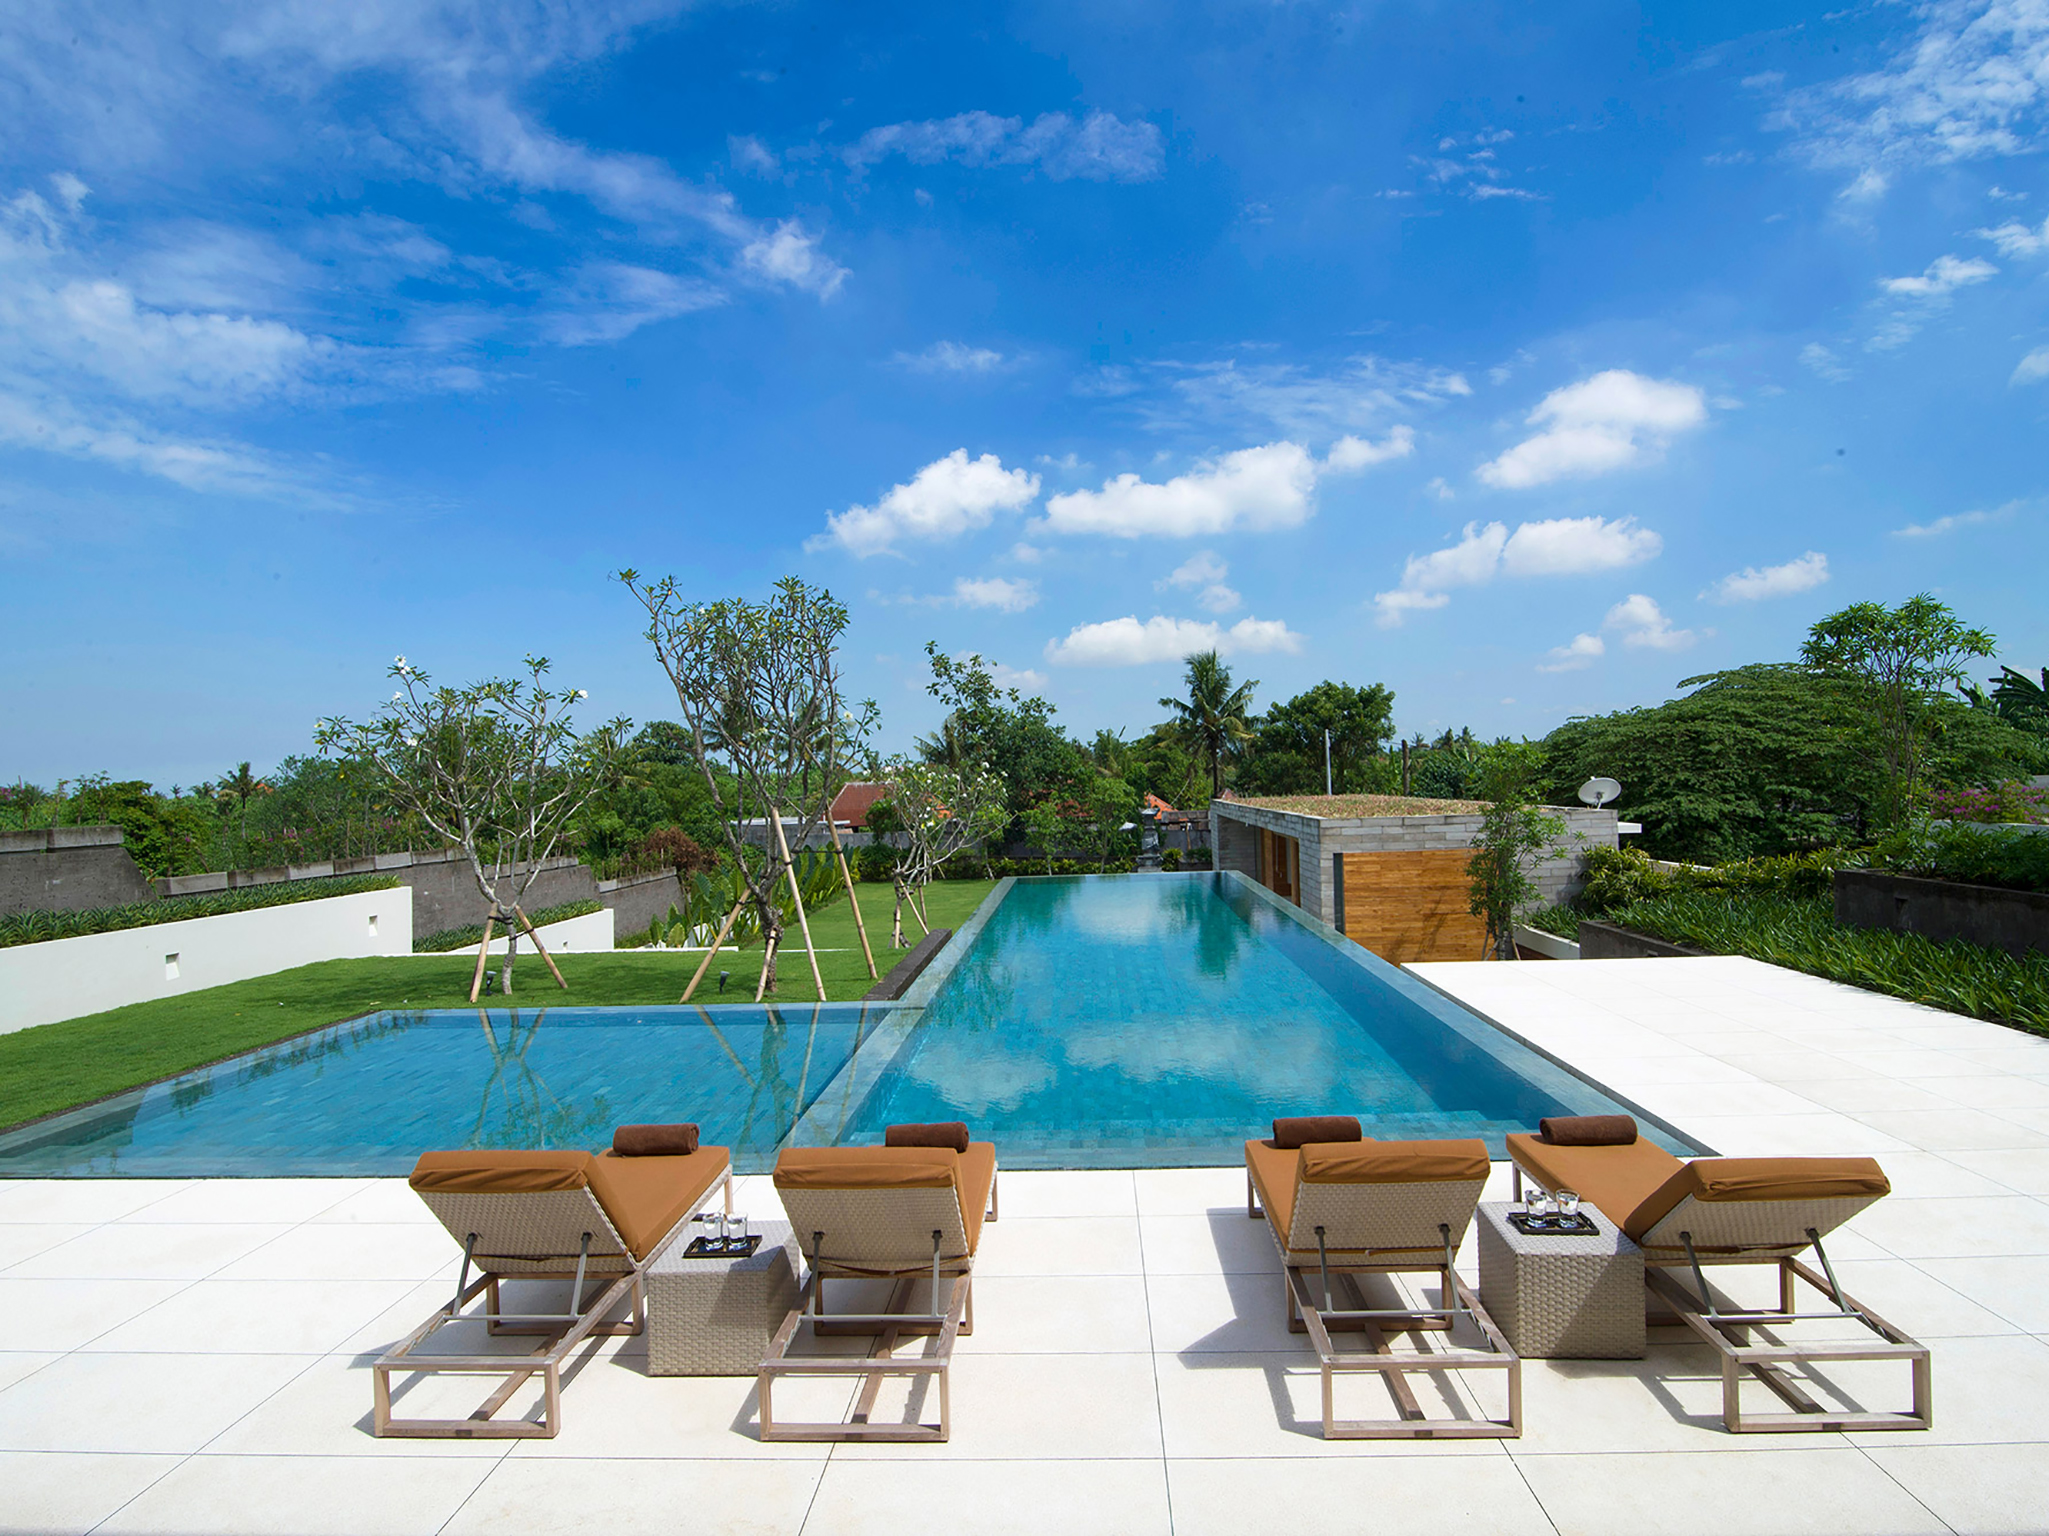 The Iman Villa - Sunloungers by the pool - The Iman Villa, Canggu, Bali